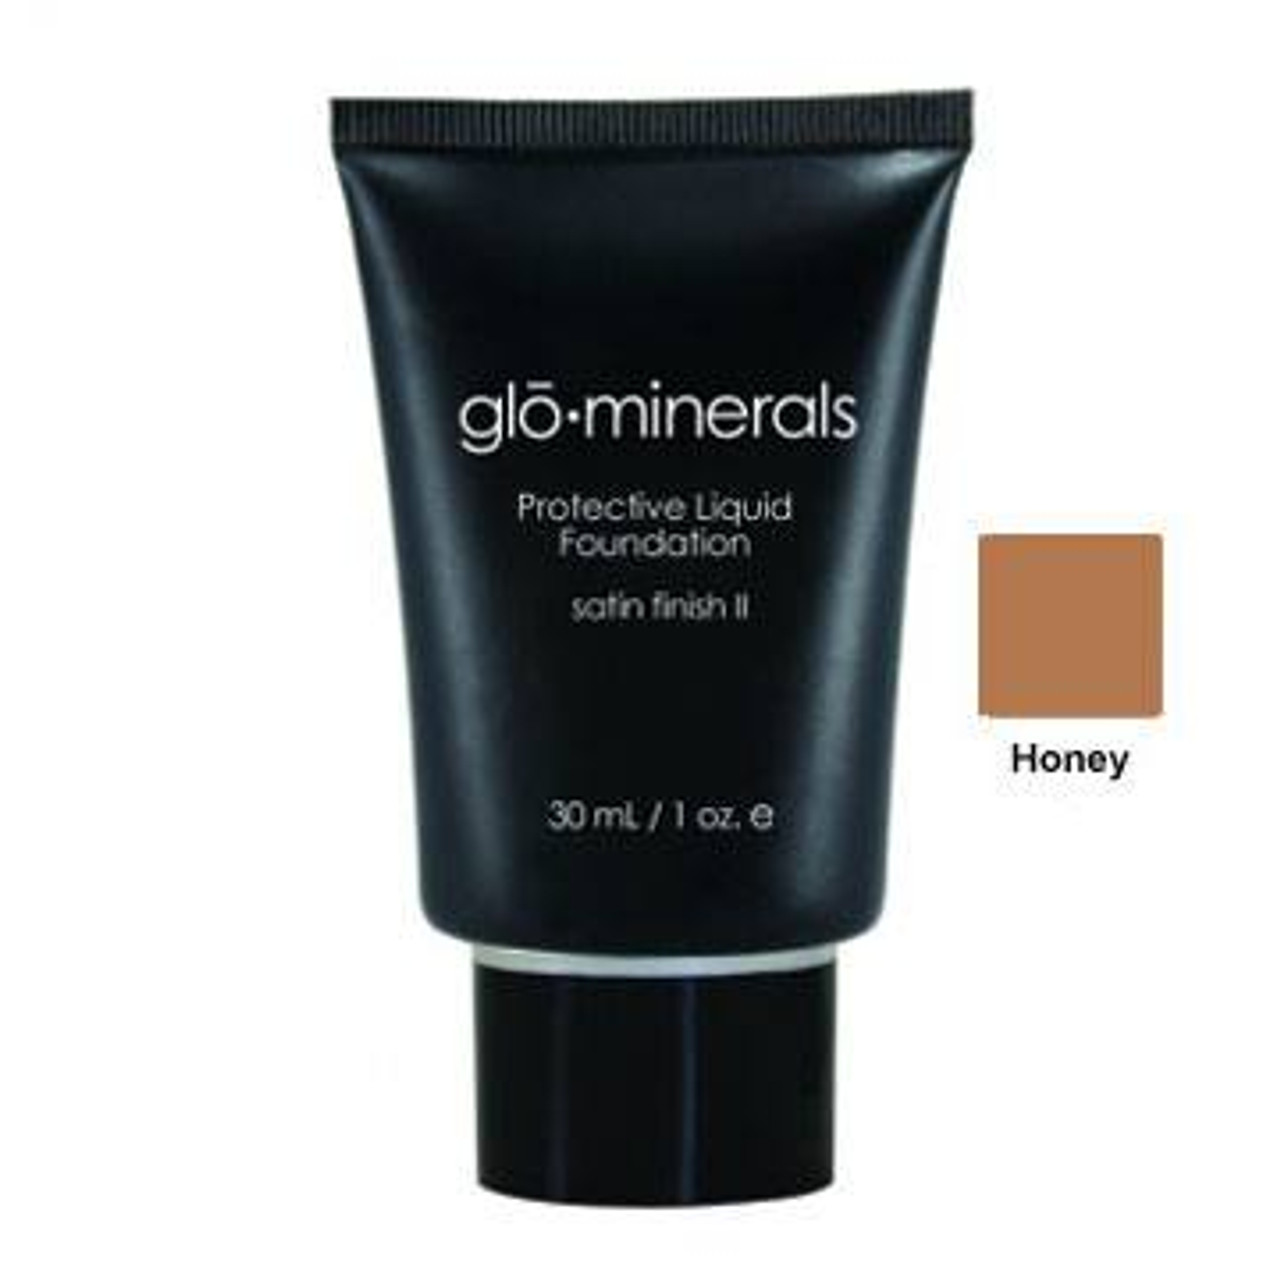 GloMinerals Protective Liquid Foundation-Satin II, 1.4 oz - Honey